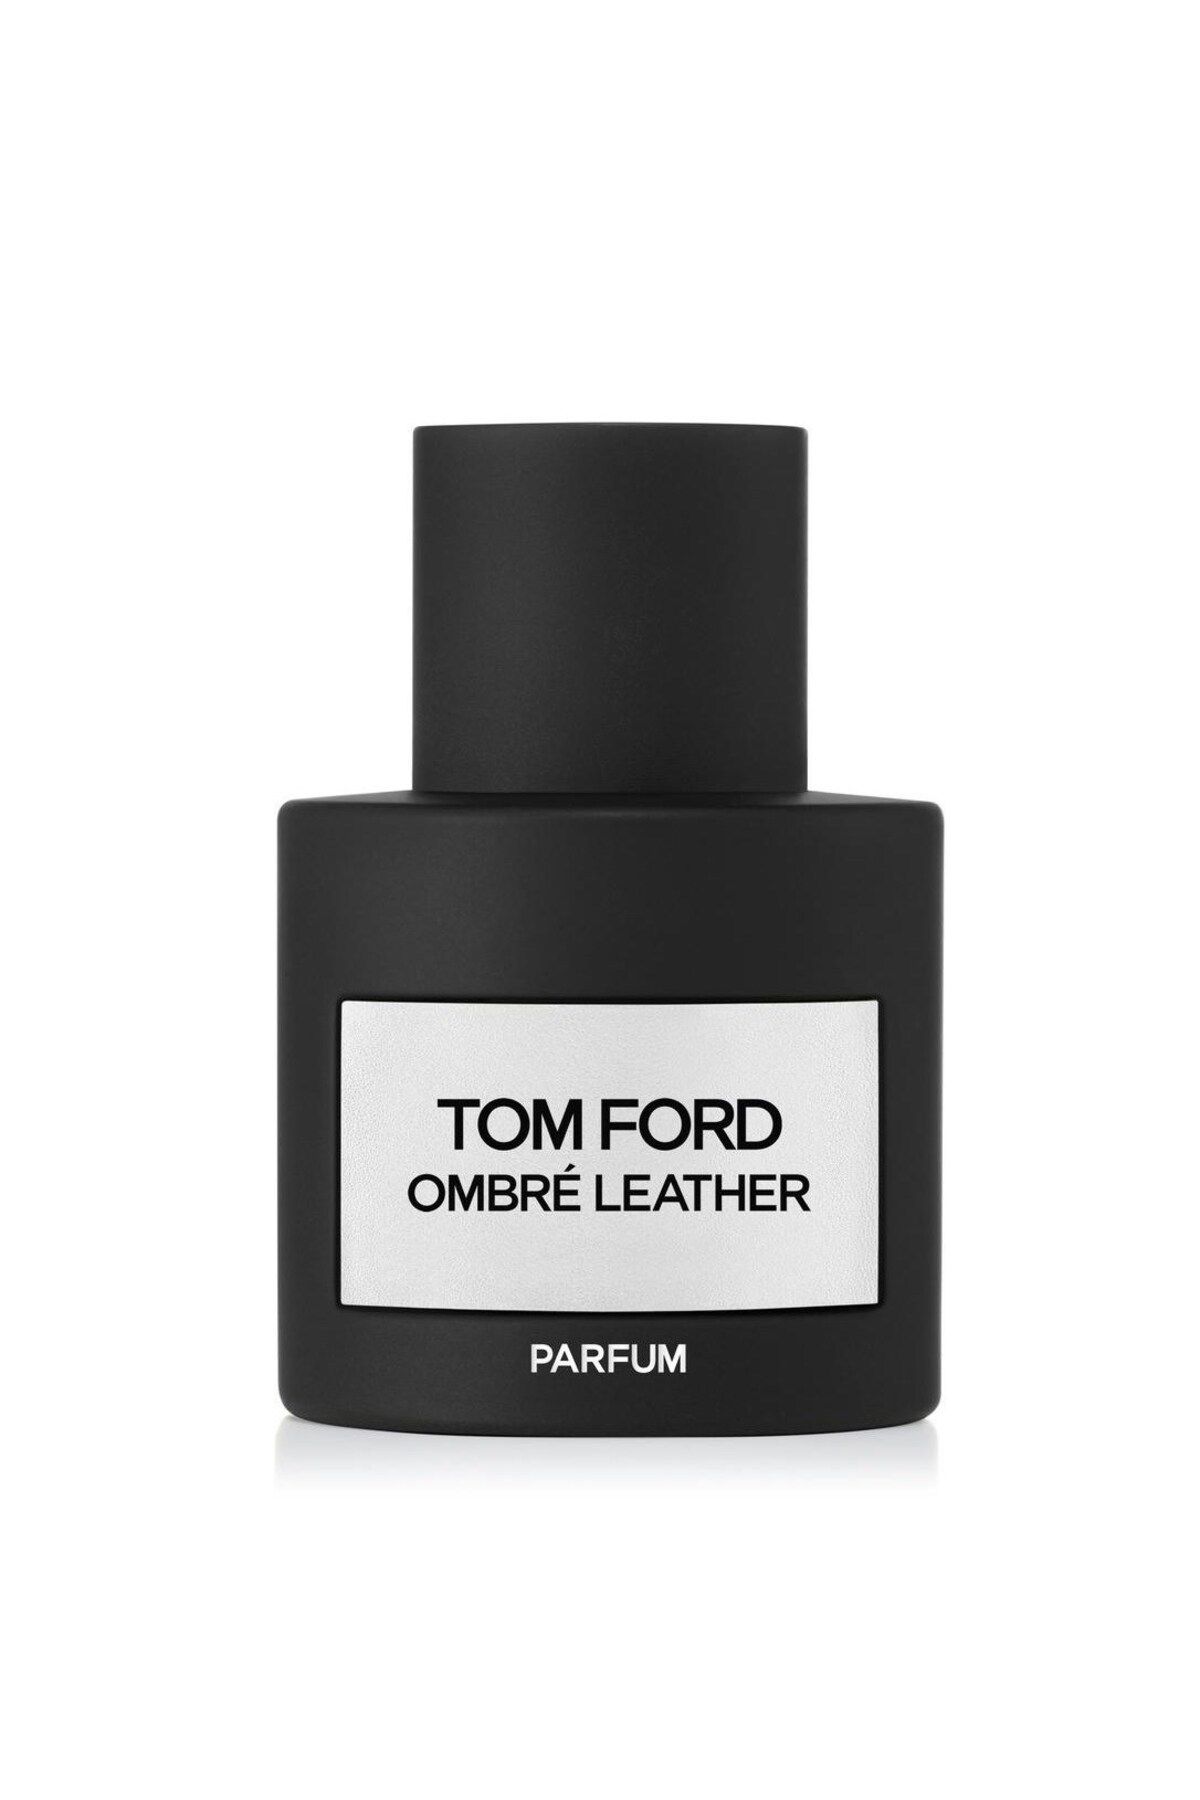 Tom Ford Ombre Leather Eau De Parfum – Çiçeksi Odunsu Unisex Parfüm 50 Ml